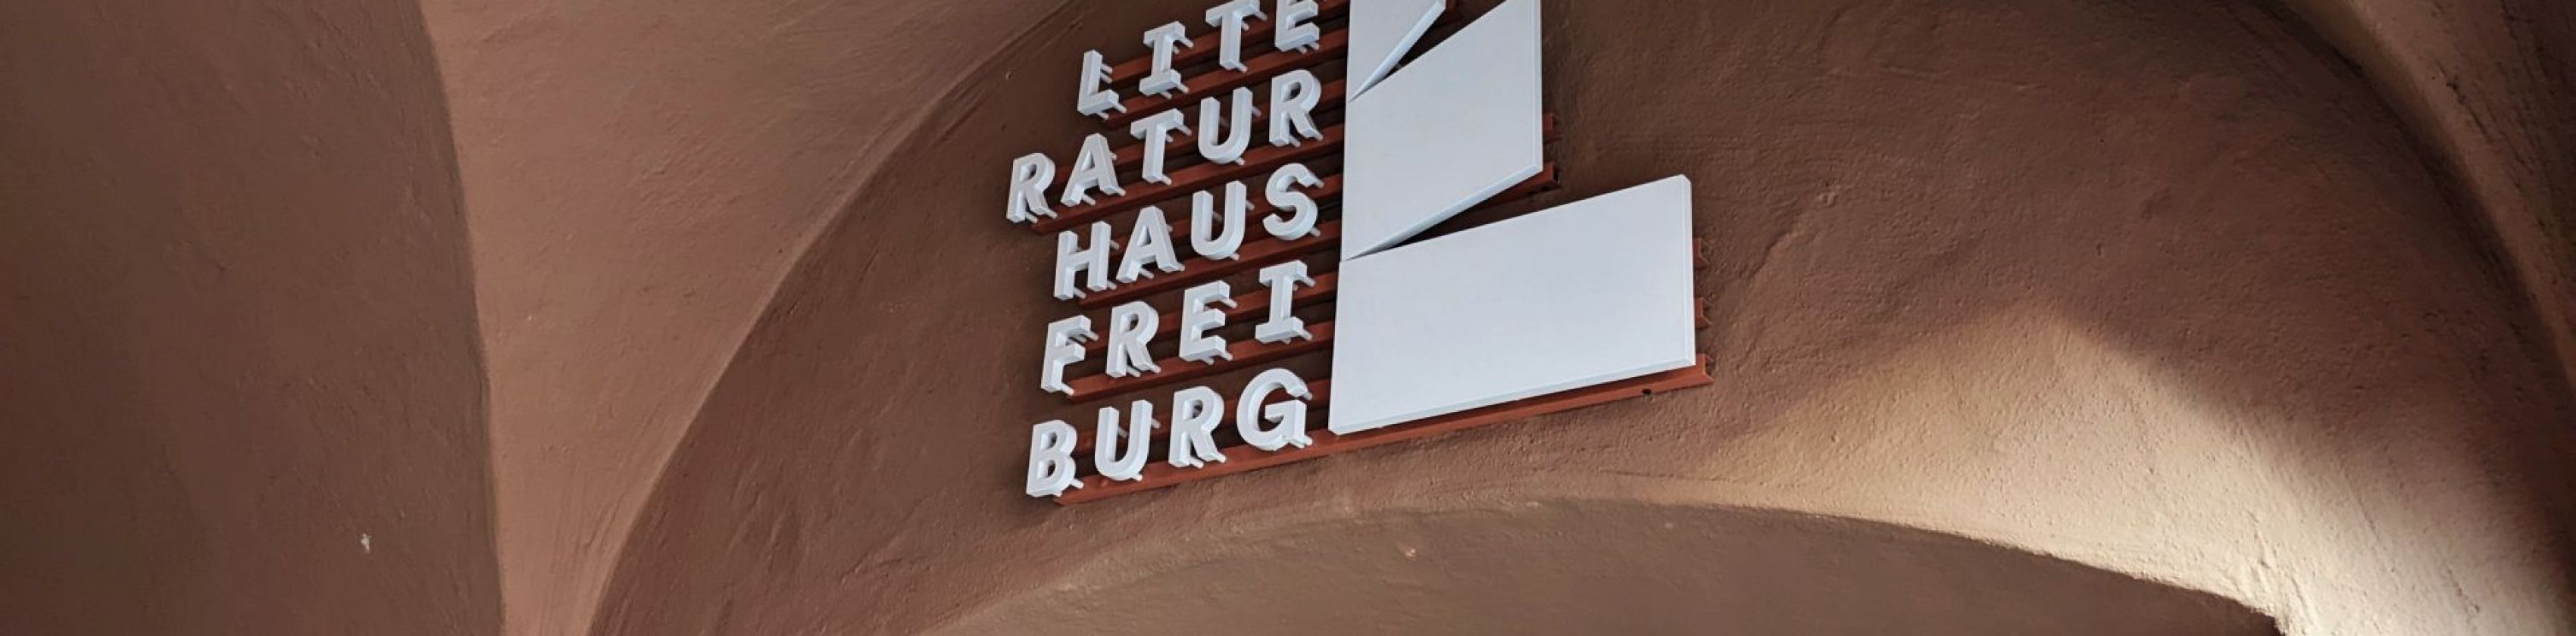 Literaturhaus Freiburg_FWTM-Vögtle